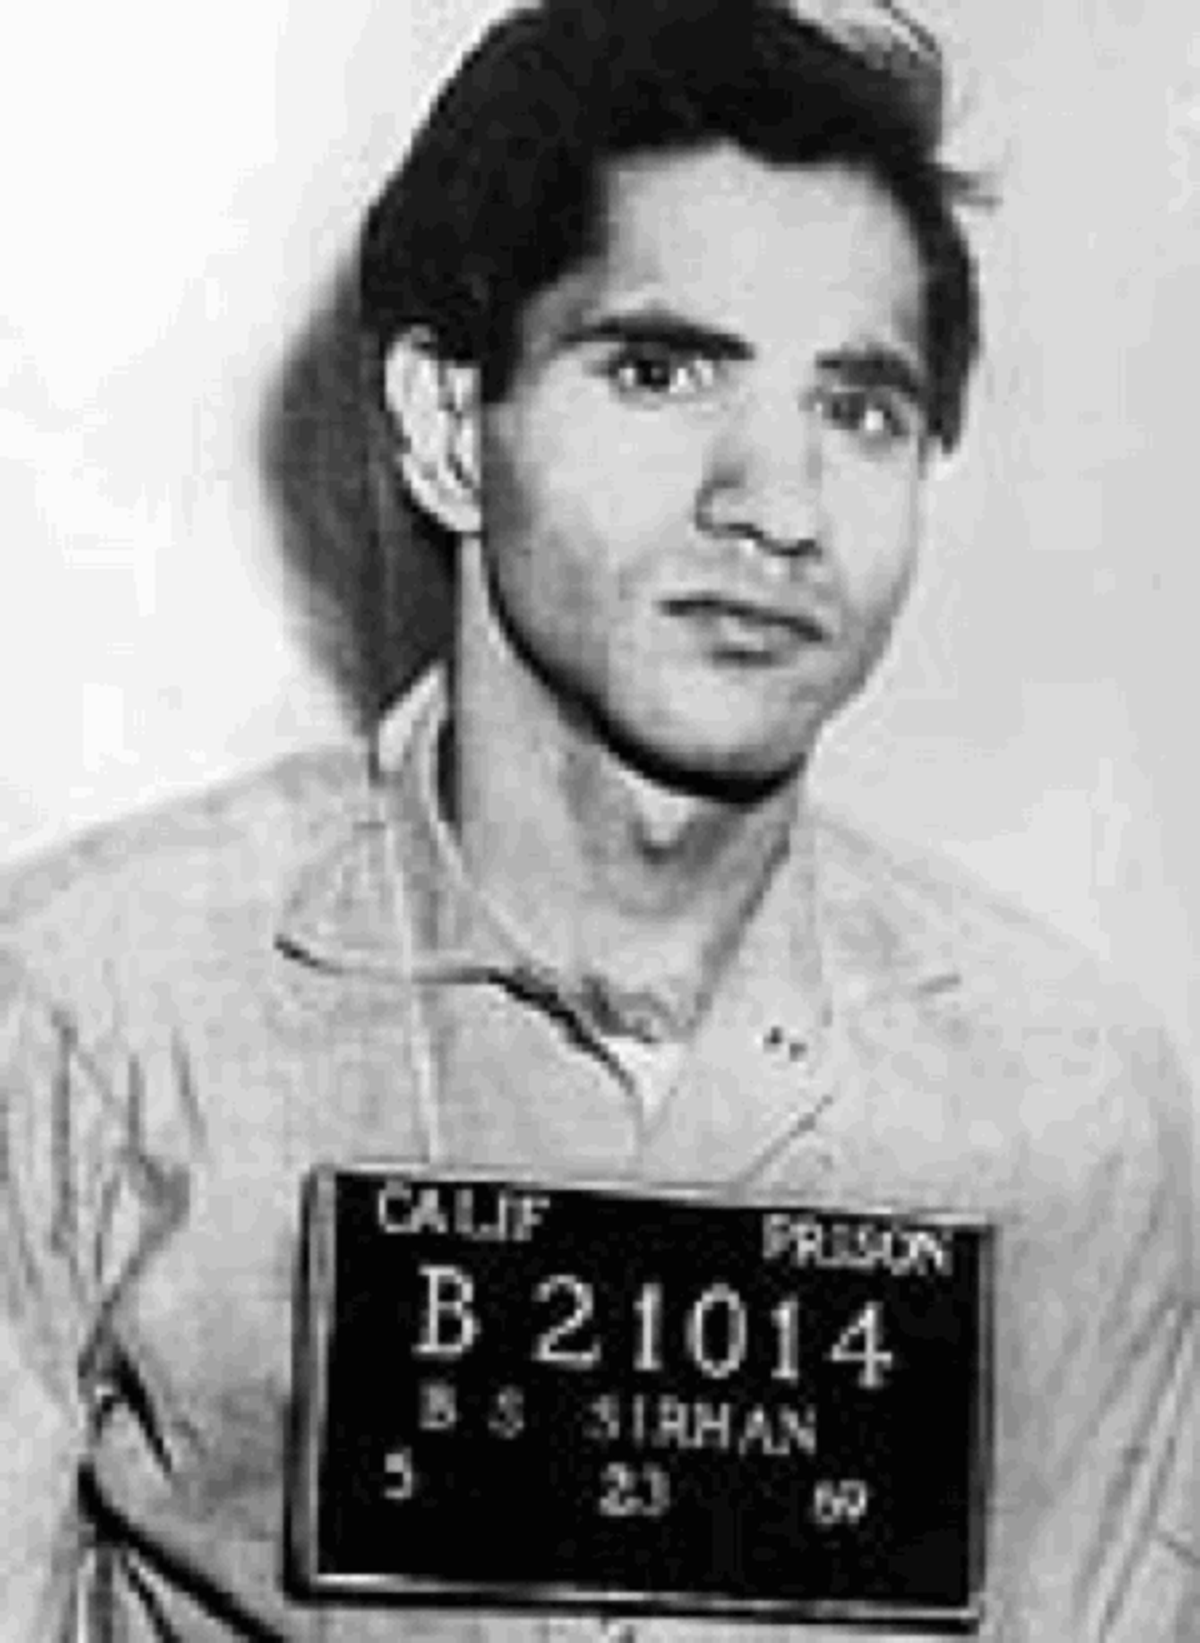 Mugshot of Sirhan Bishara Sirhan taken after his arrest for assassinating Robert F. Kennedy in 1968